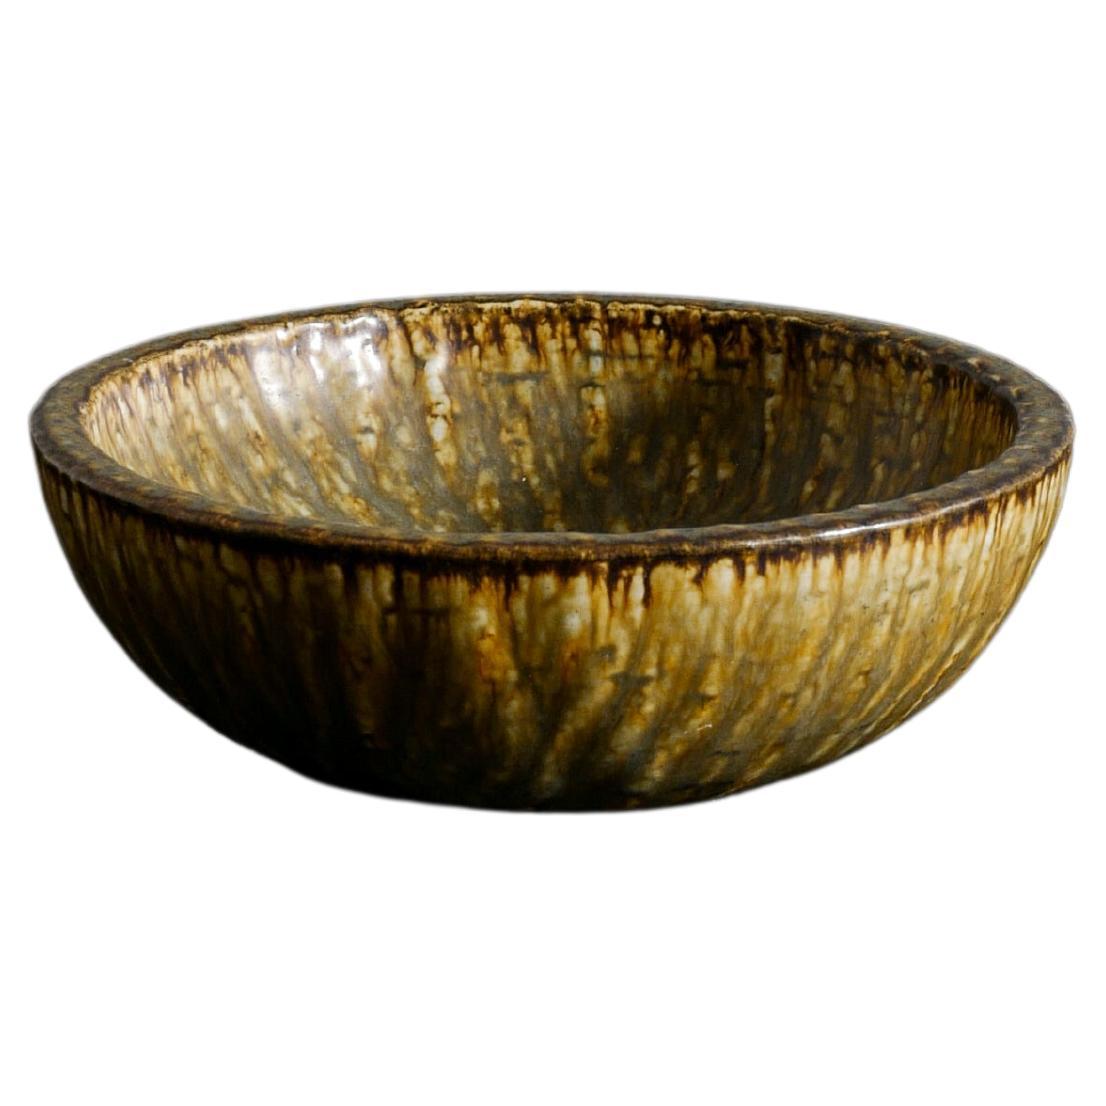 Gunnar Nylund "Rubus" Mid Century Ceramic Bowl Dish for Rörstrand Sweden, 1950s For Sale